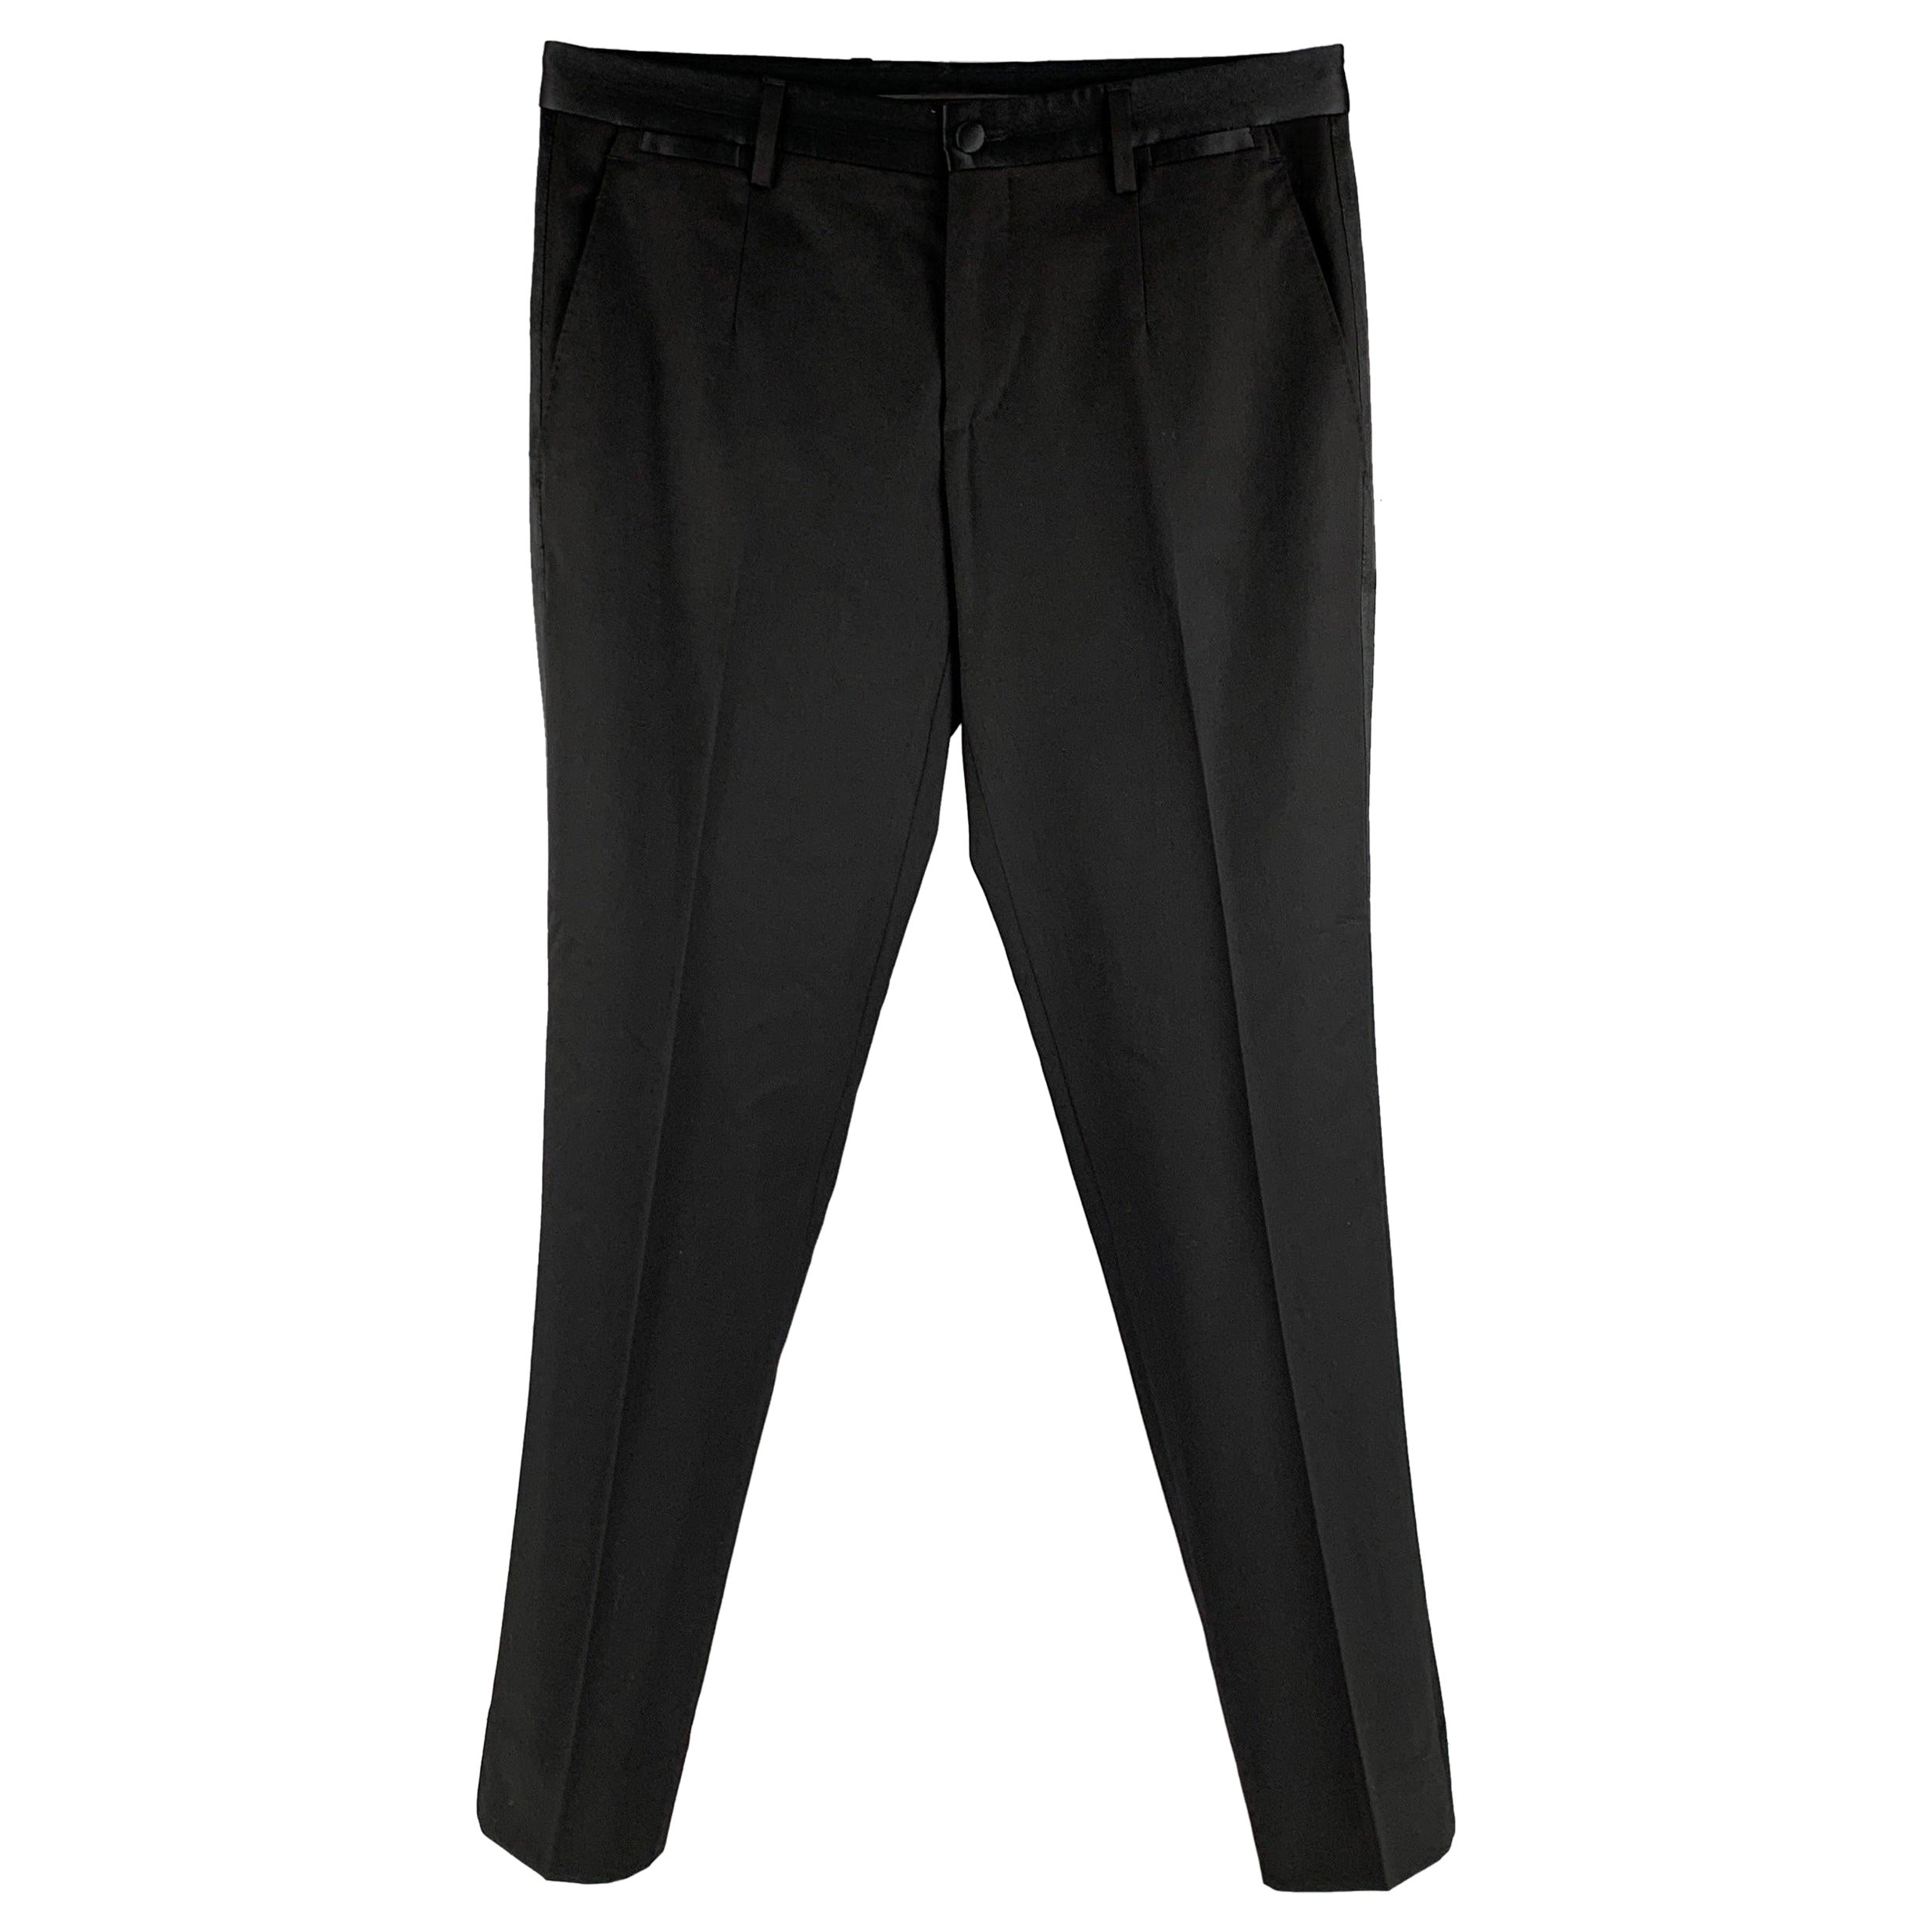 DOLCE & GABBANA Size 28 Black Wool Blend Tuxedo Dress Pants